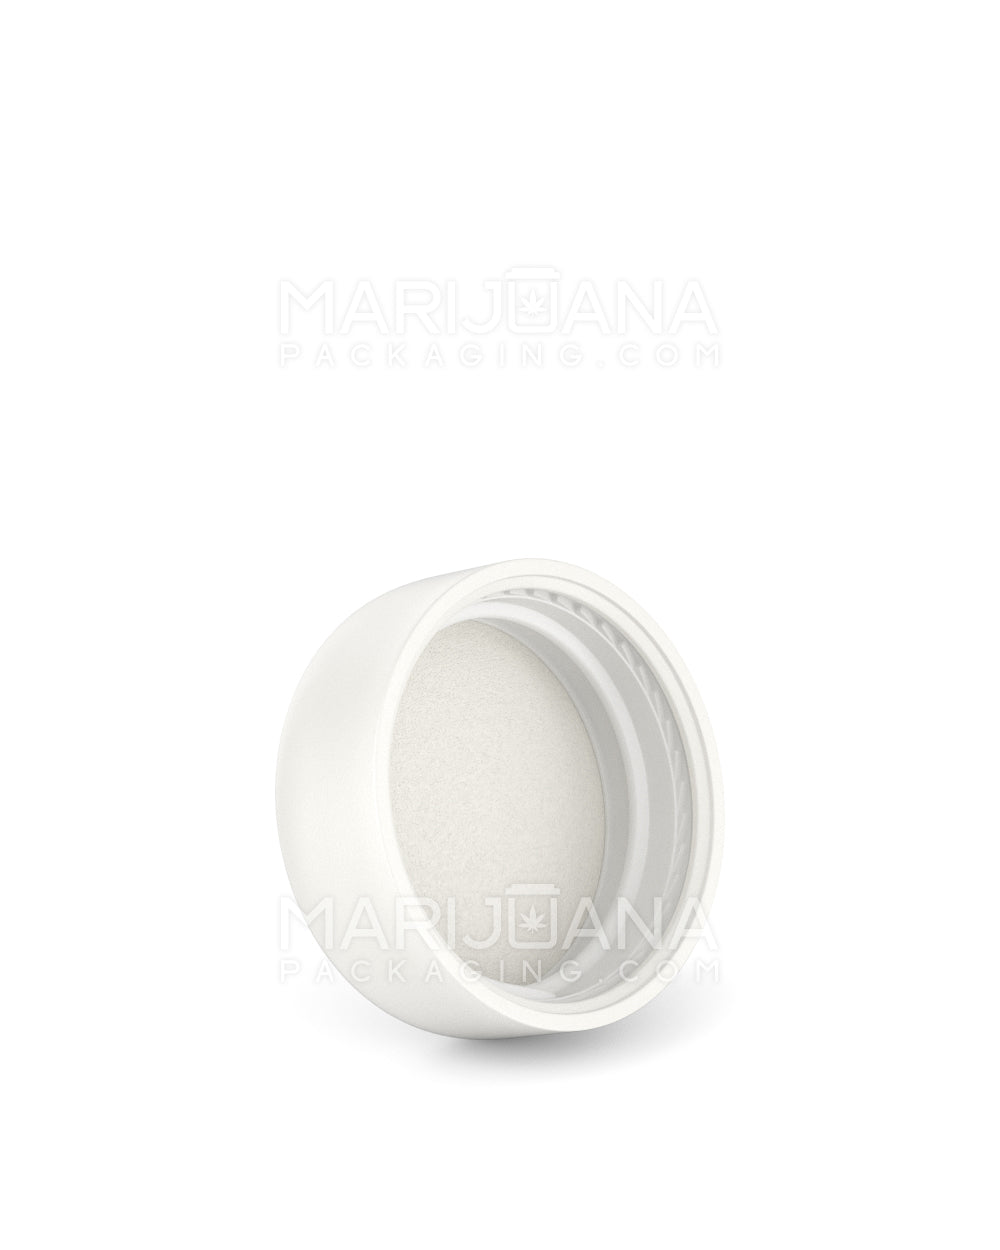 POLLEN GEAR | HiLine Child Resistant Smooth Push Down & Turn Plastic Round Caps w/ Foam Liner | 28mm - Matte White - 308 Count - 2